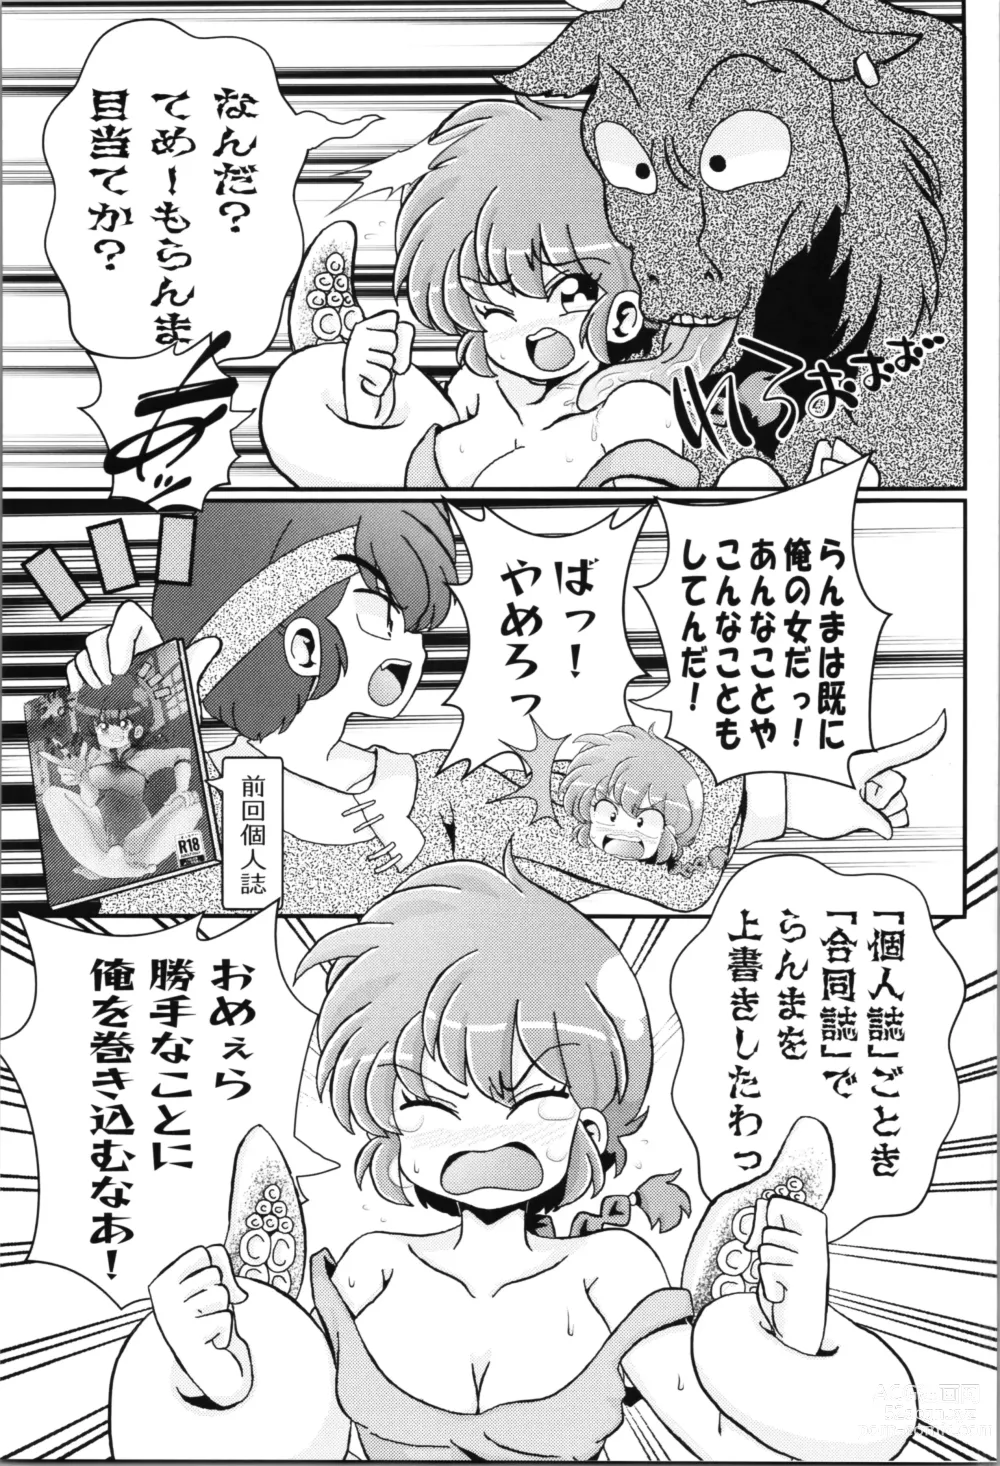 Page 49 of doujinshi You Too!